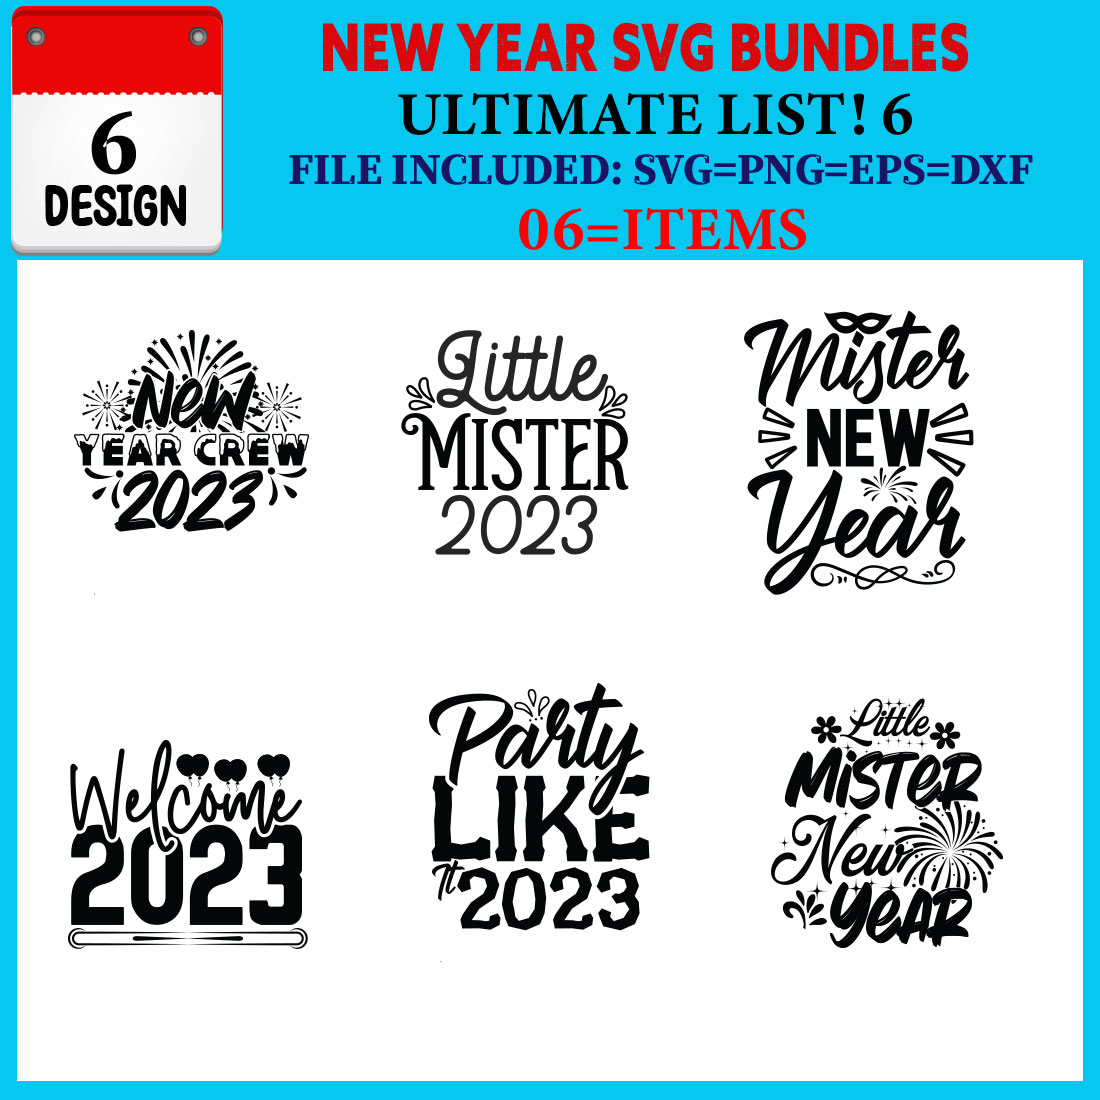 New Year T-shirt Design Bundle Vol-09 cover image.